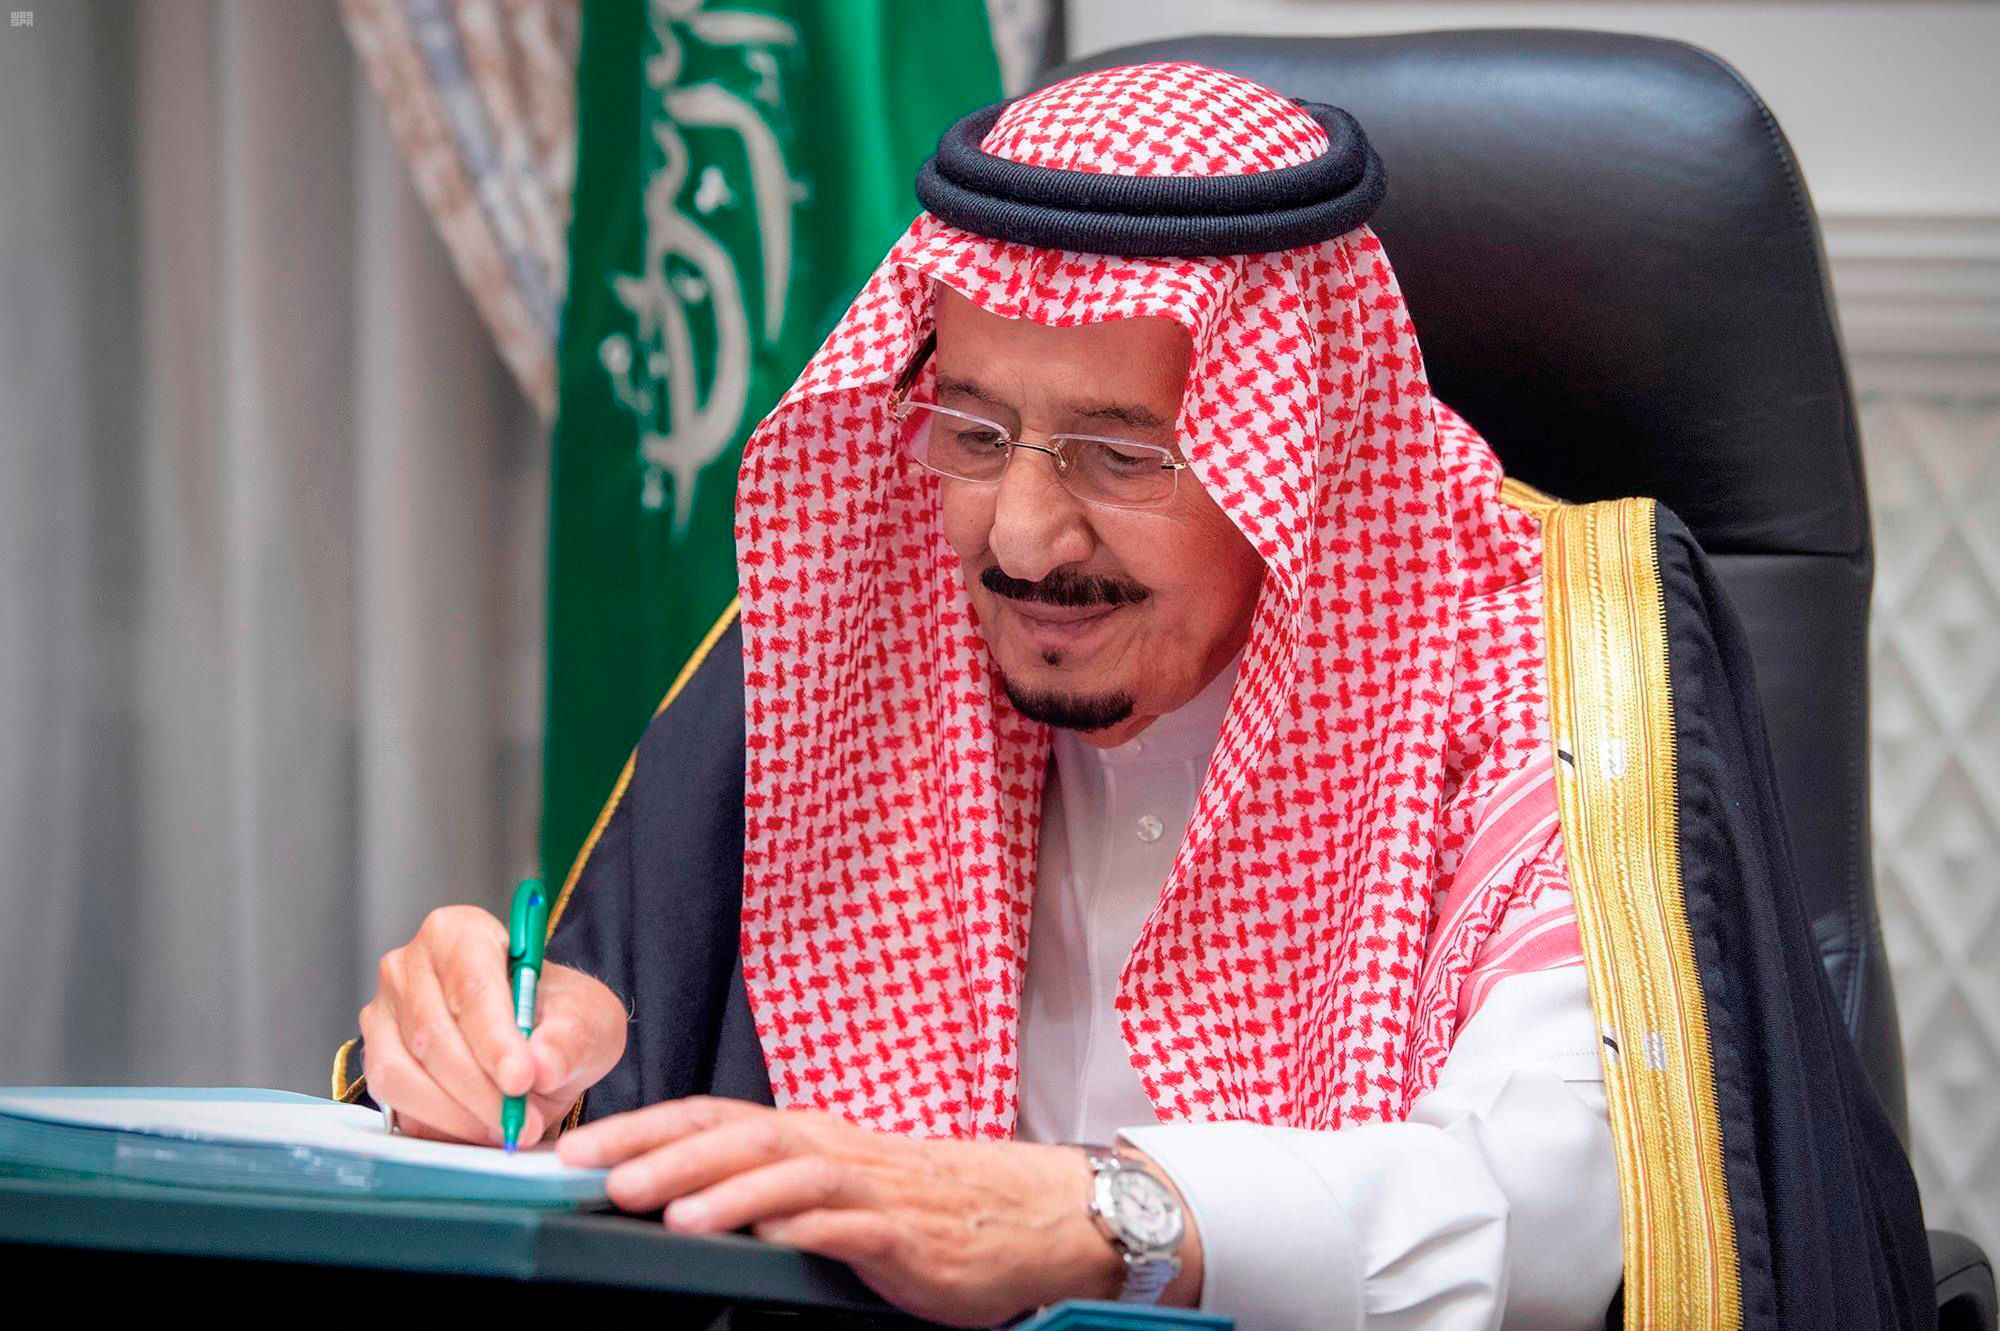 King Salman of Saudi Arabia gets COVID-19 vaccine